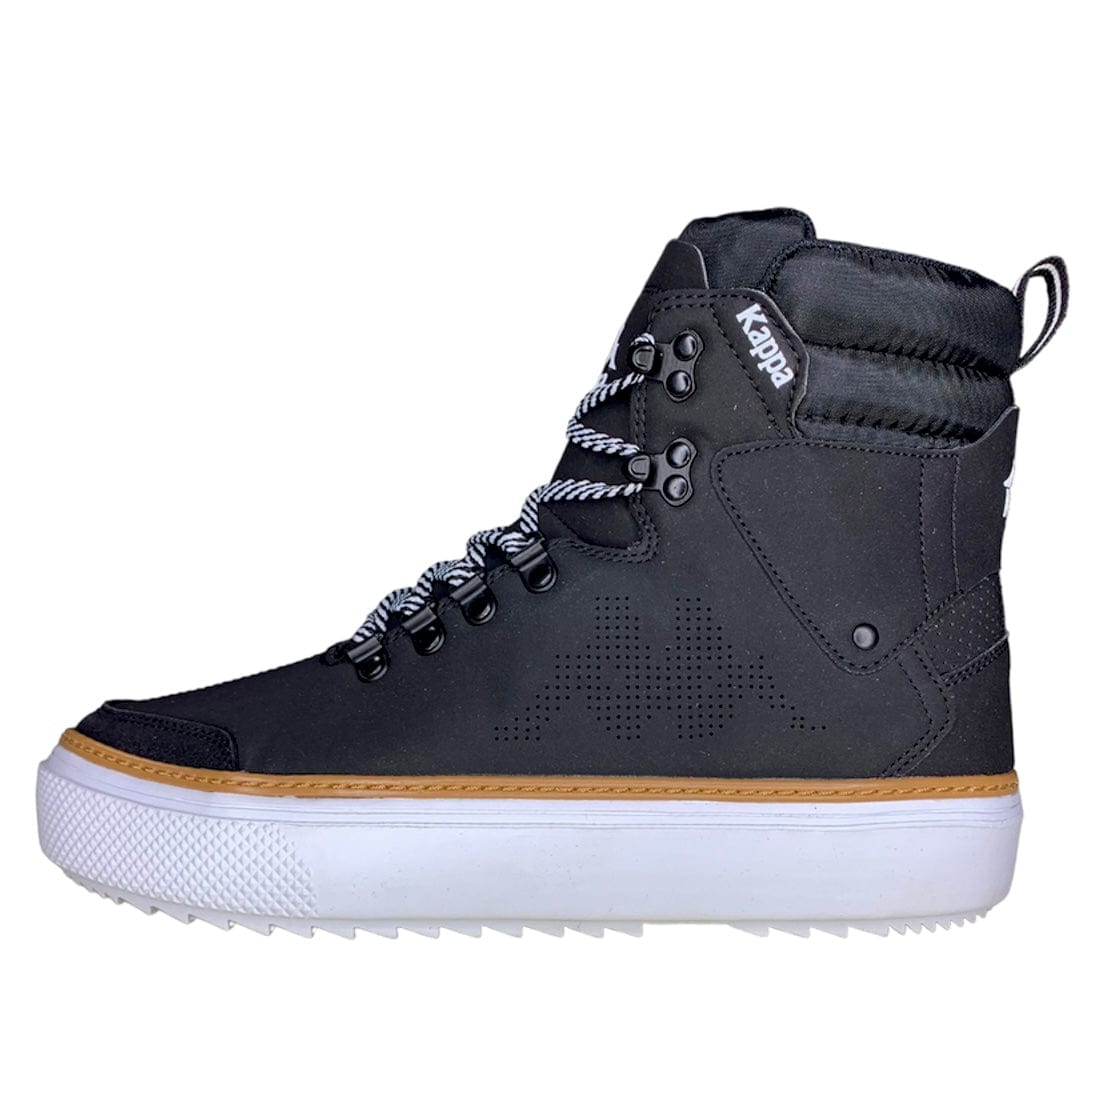 331G4IW-A0U 2 (Black/White) Boots USA Istrid City – Kappa Man Sneaker Authentic